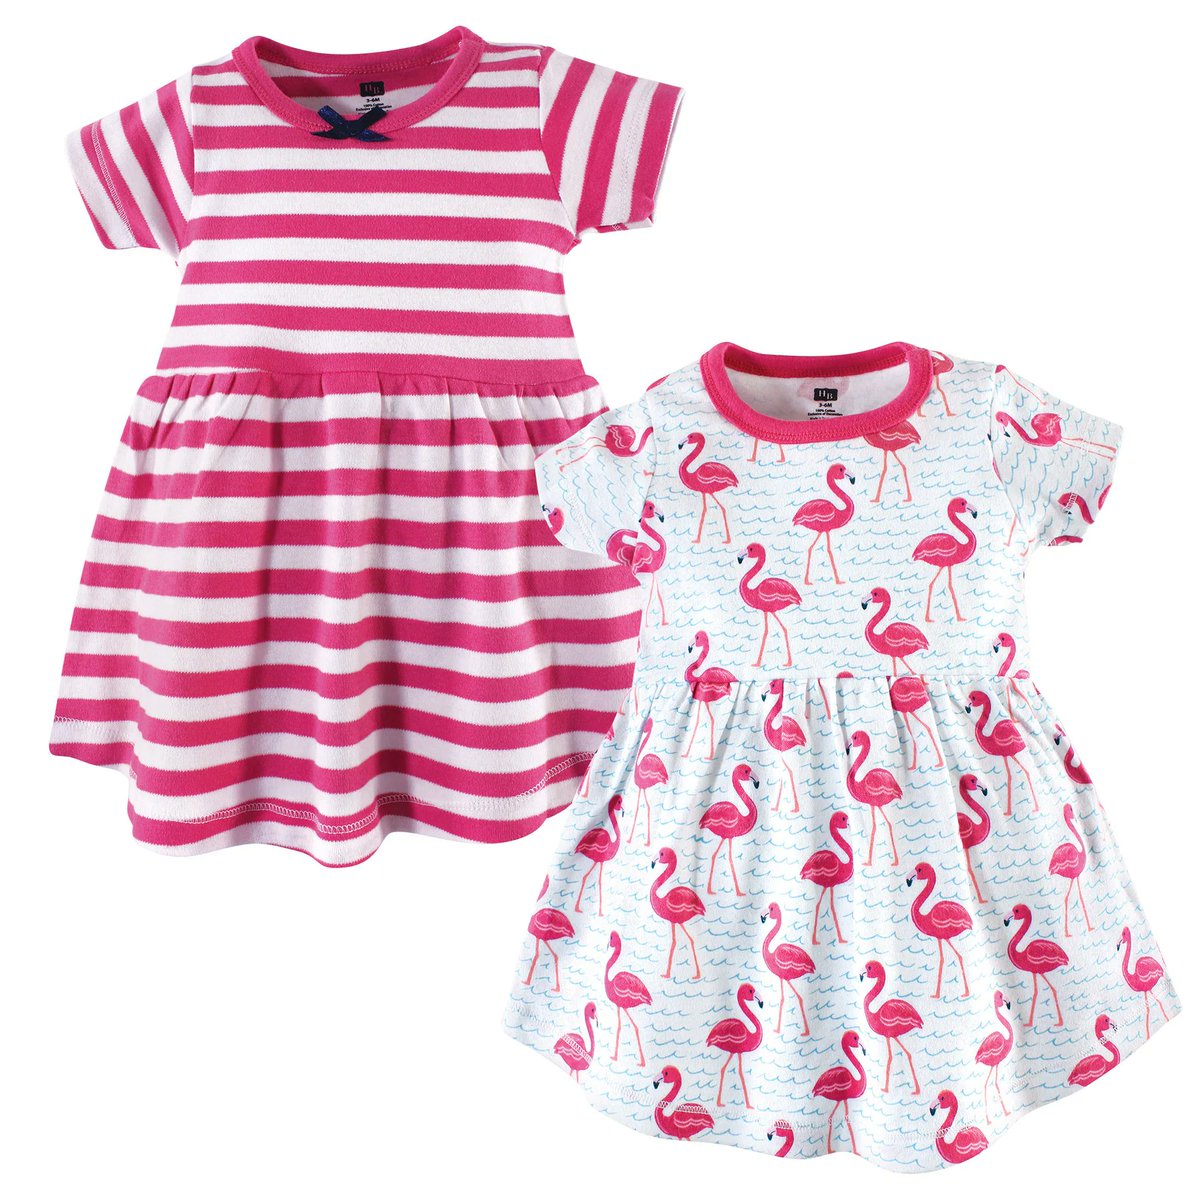 Baby Dress
Hudson Baby Cotton Dresses, 
Bright Flamingo

Buy Now>>> cutt.ly/F3MpJzx

#babydress #dressbaby #babygirldress #babydolldress #babydresses #dressbabymurah #dressbabyimport #babydressph #dressbabyterry #dressbabygirl #babyshowerdress 
#MUNLEI #Rashford